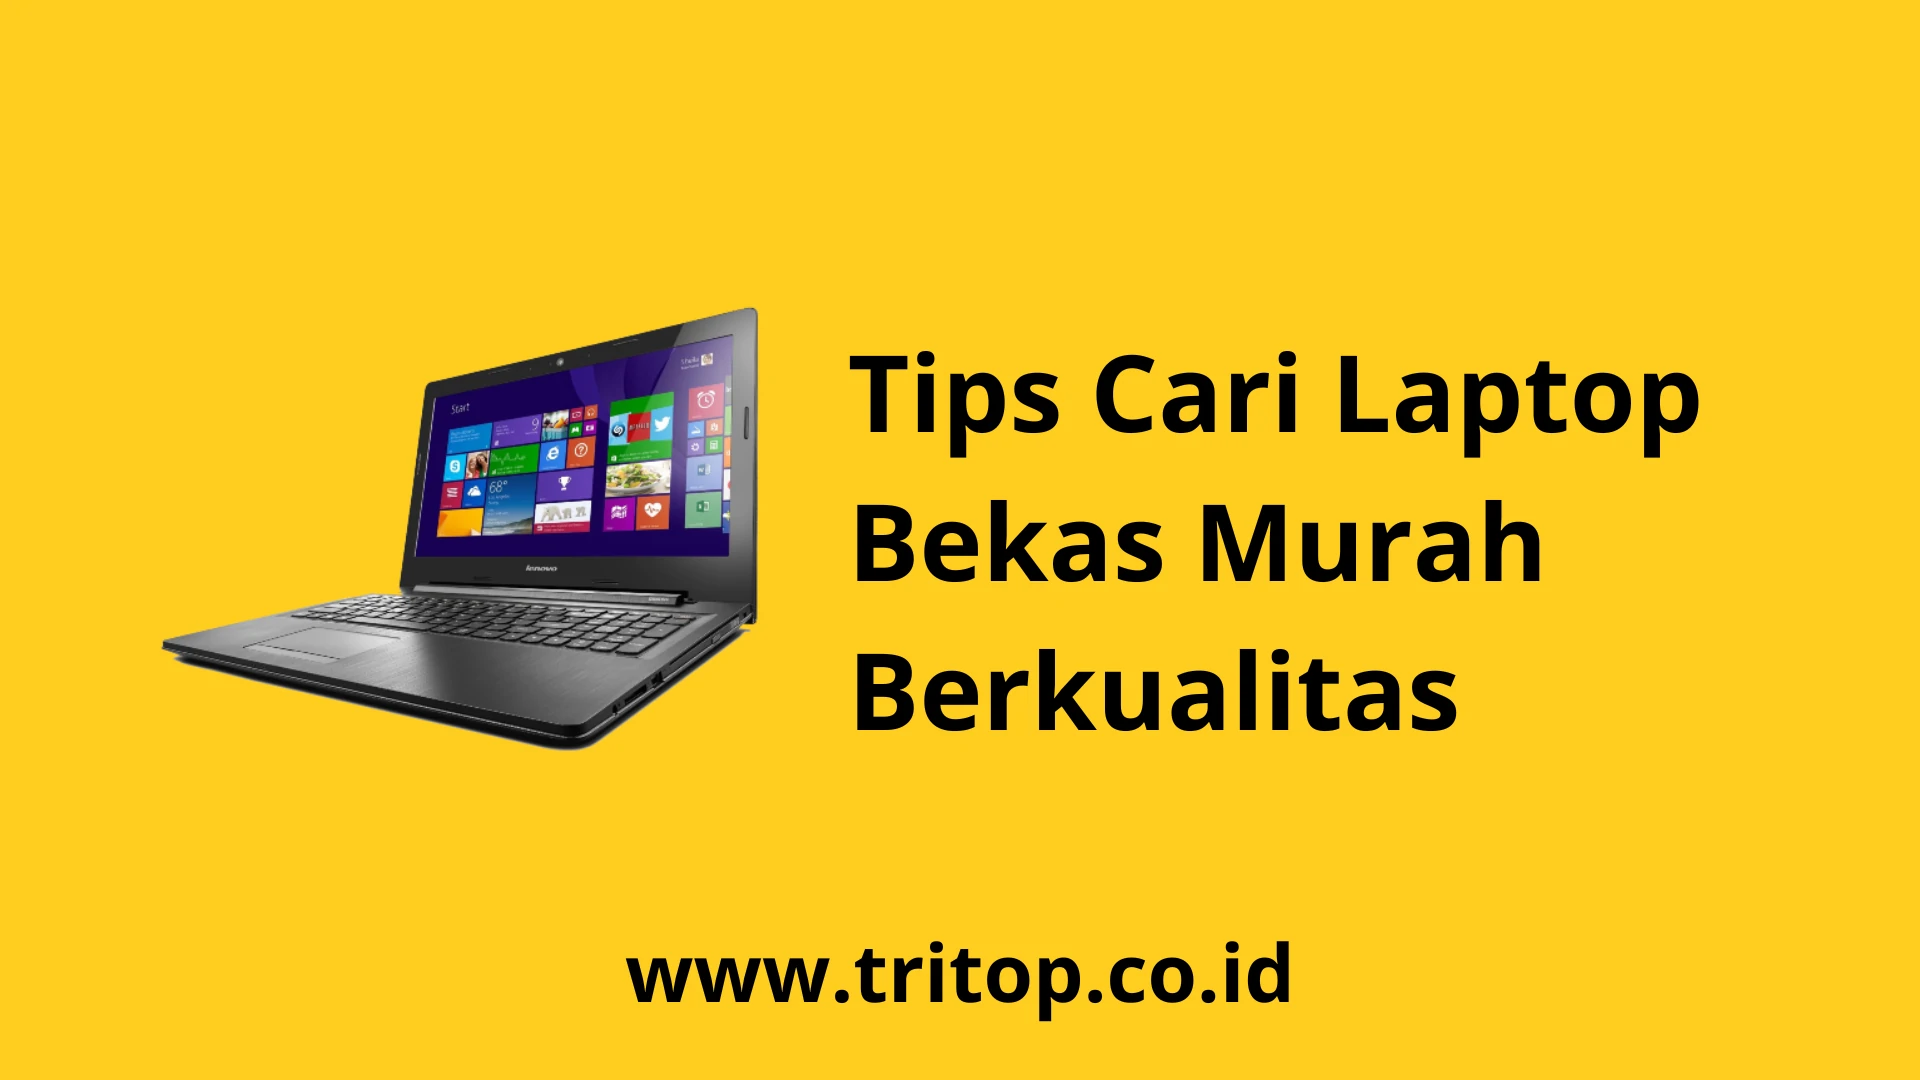 Cari Laptop Bekas Murah www.tritop.co.id